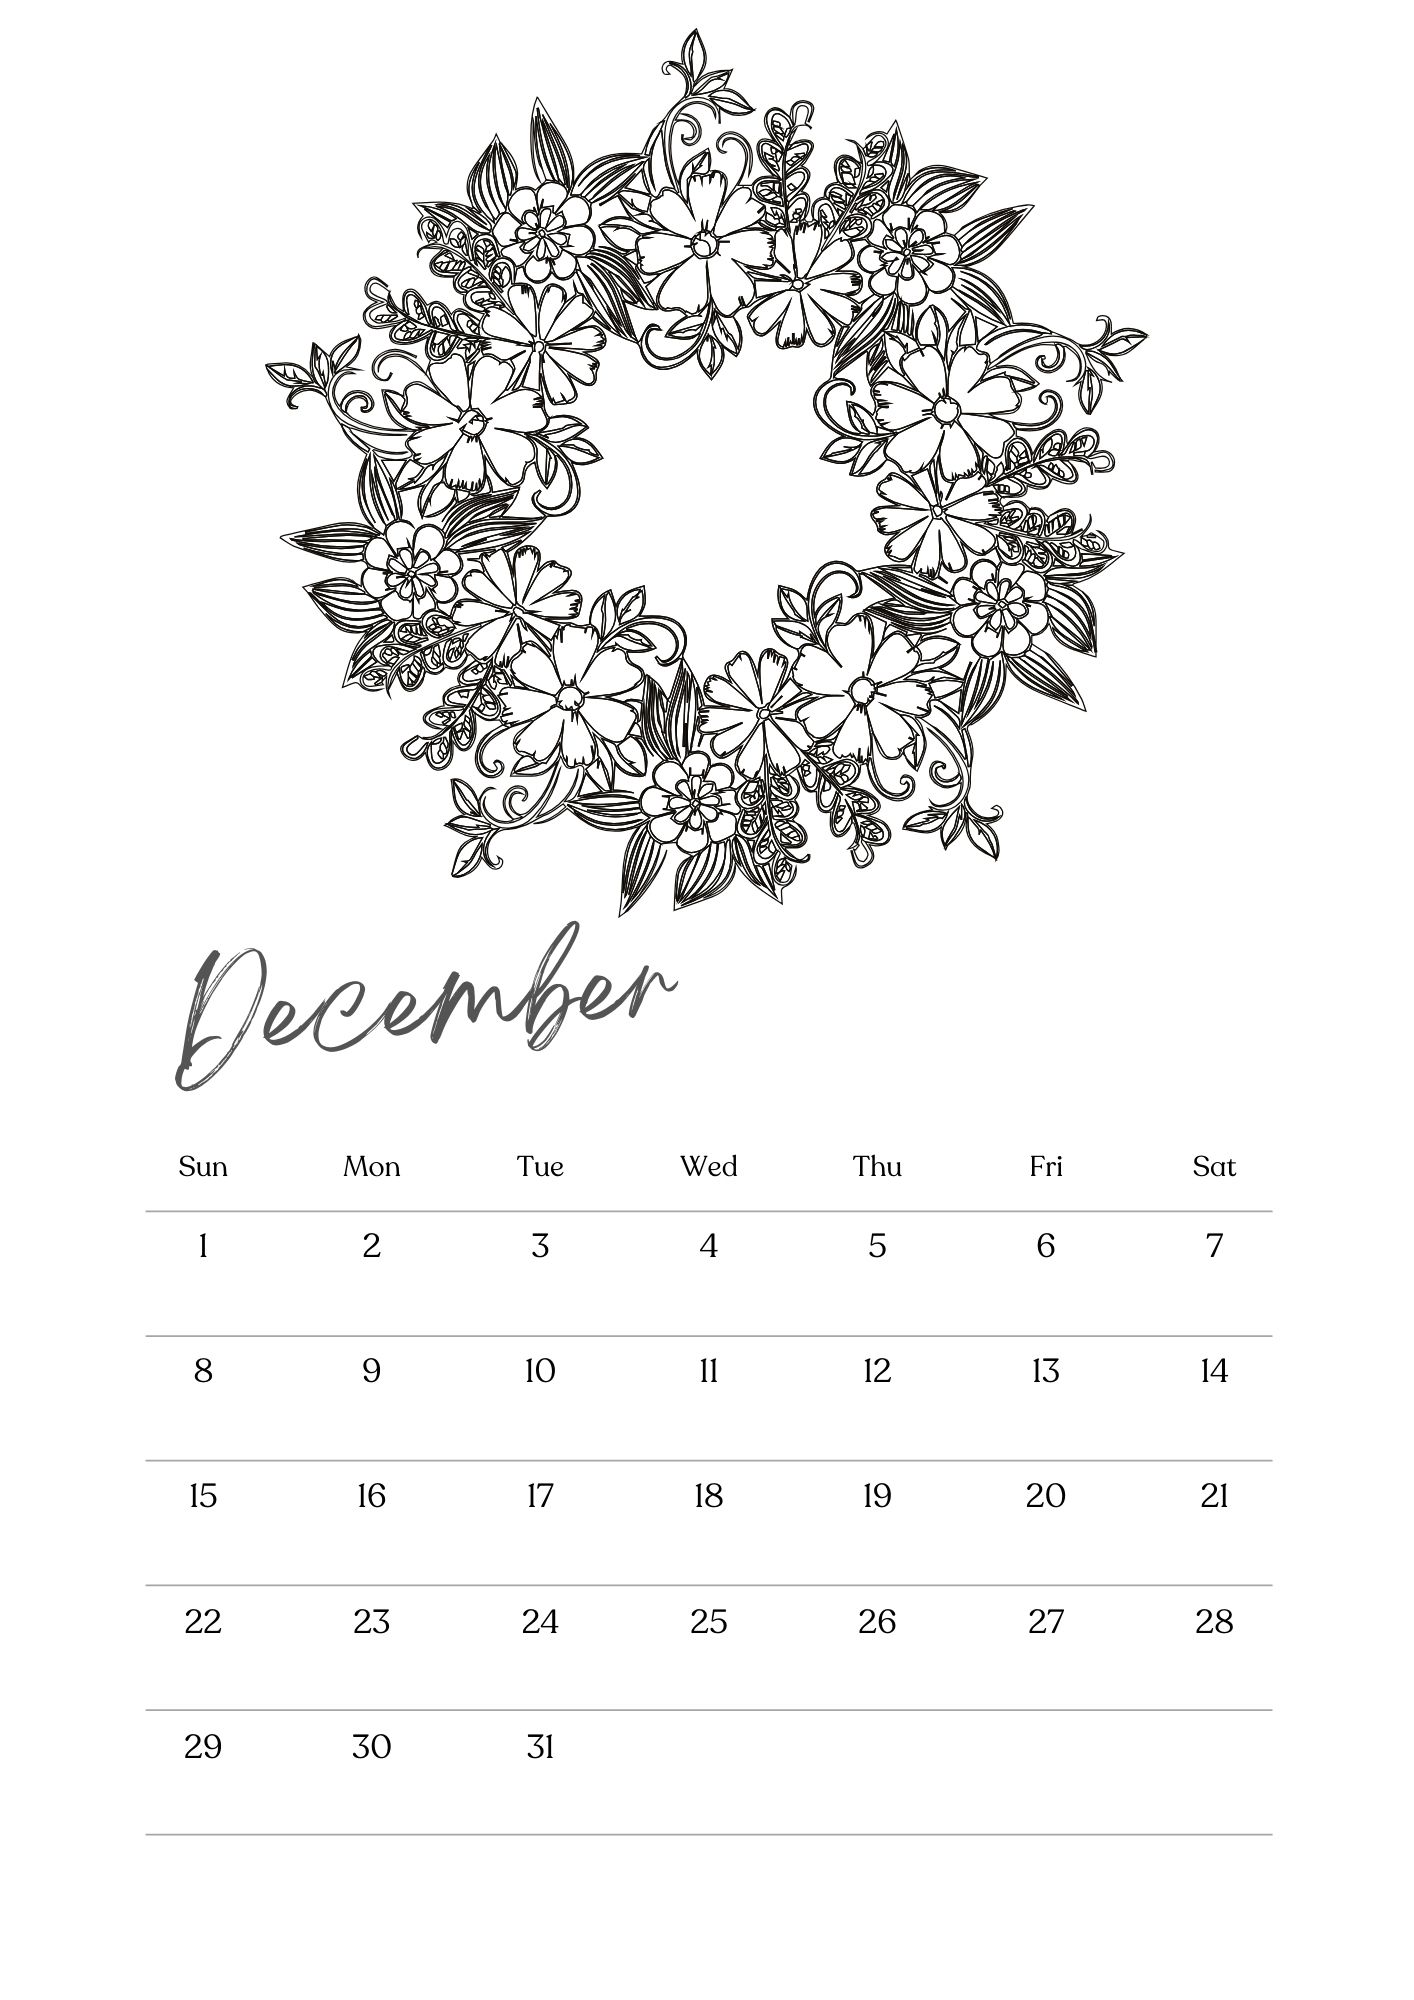 December Calendars 100 FREE PRINTABLES